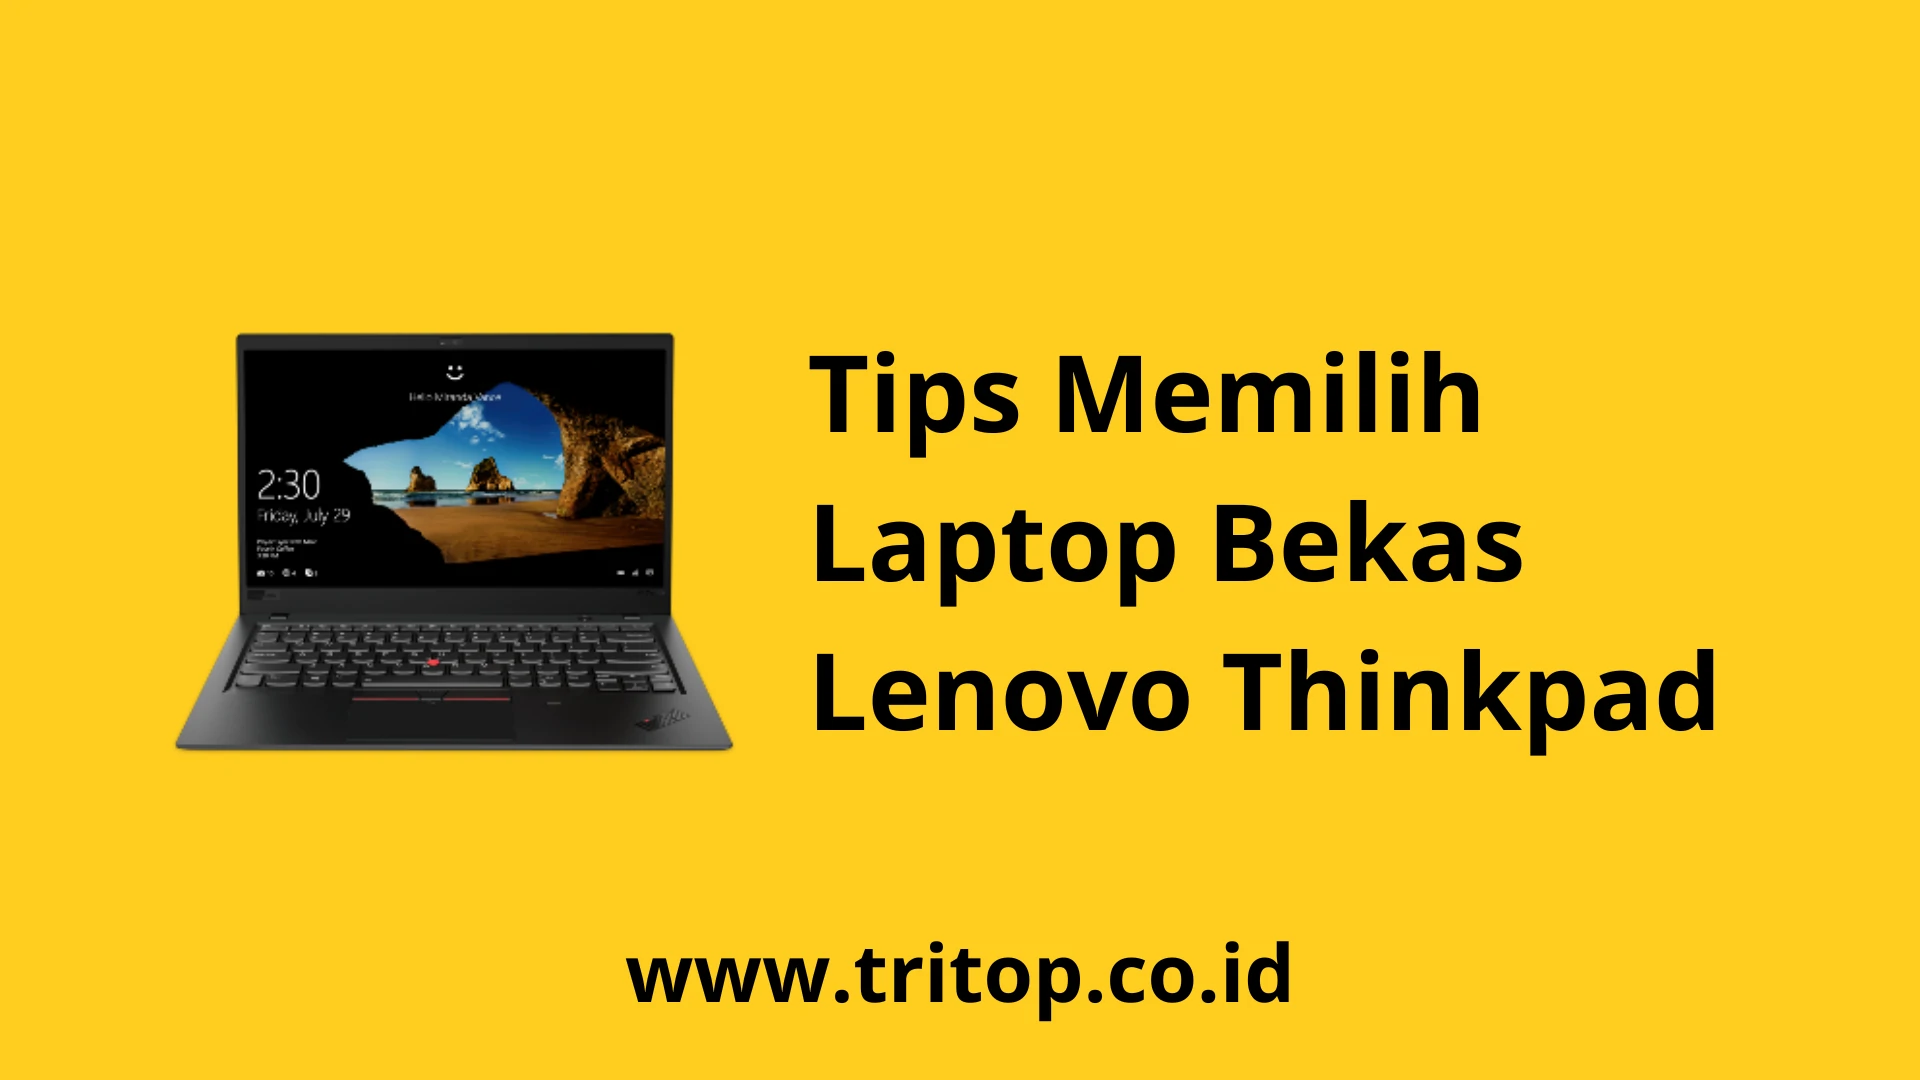 Laptop Bekas Lenovo Thinkpad Tritop.co.id